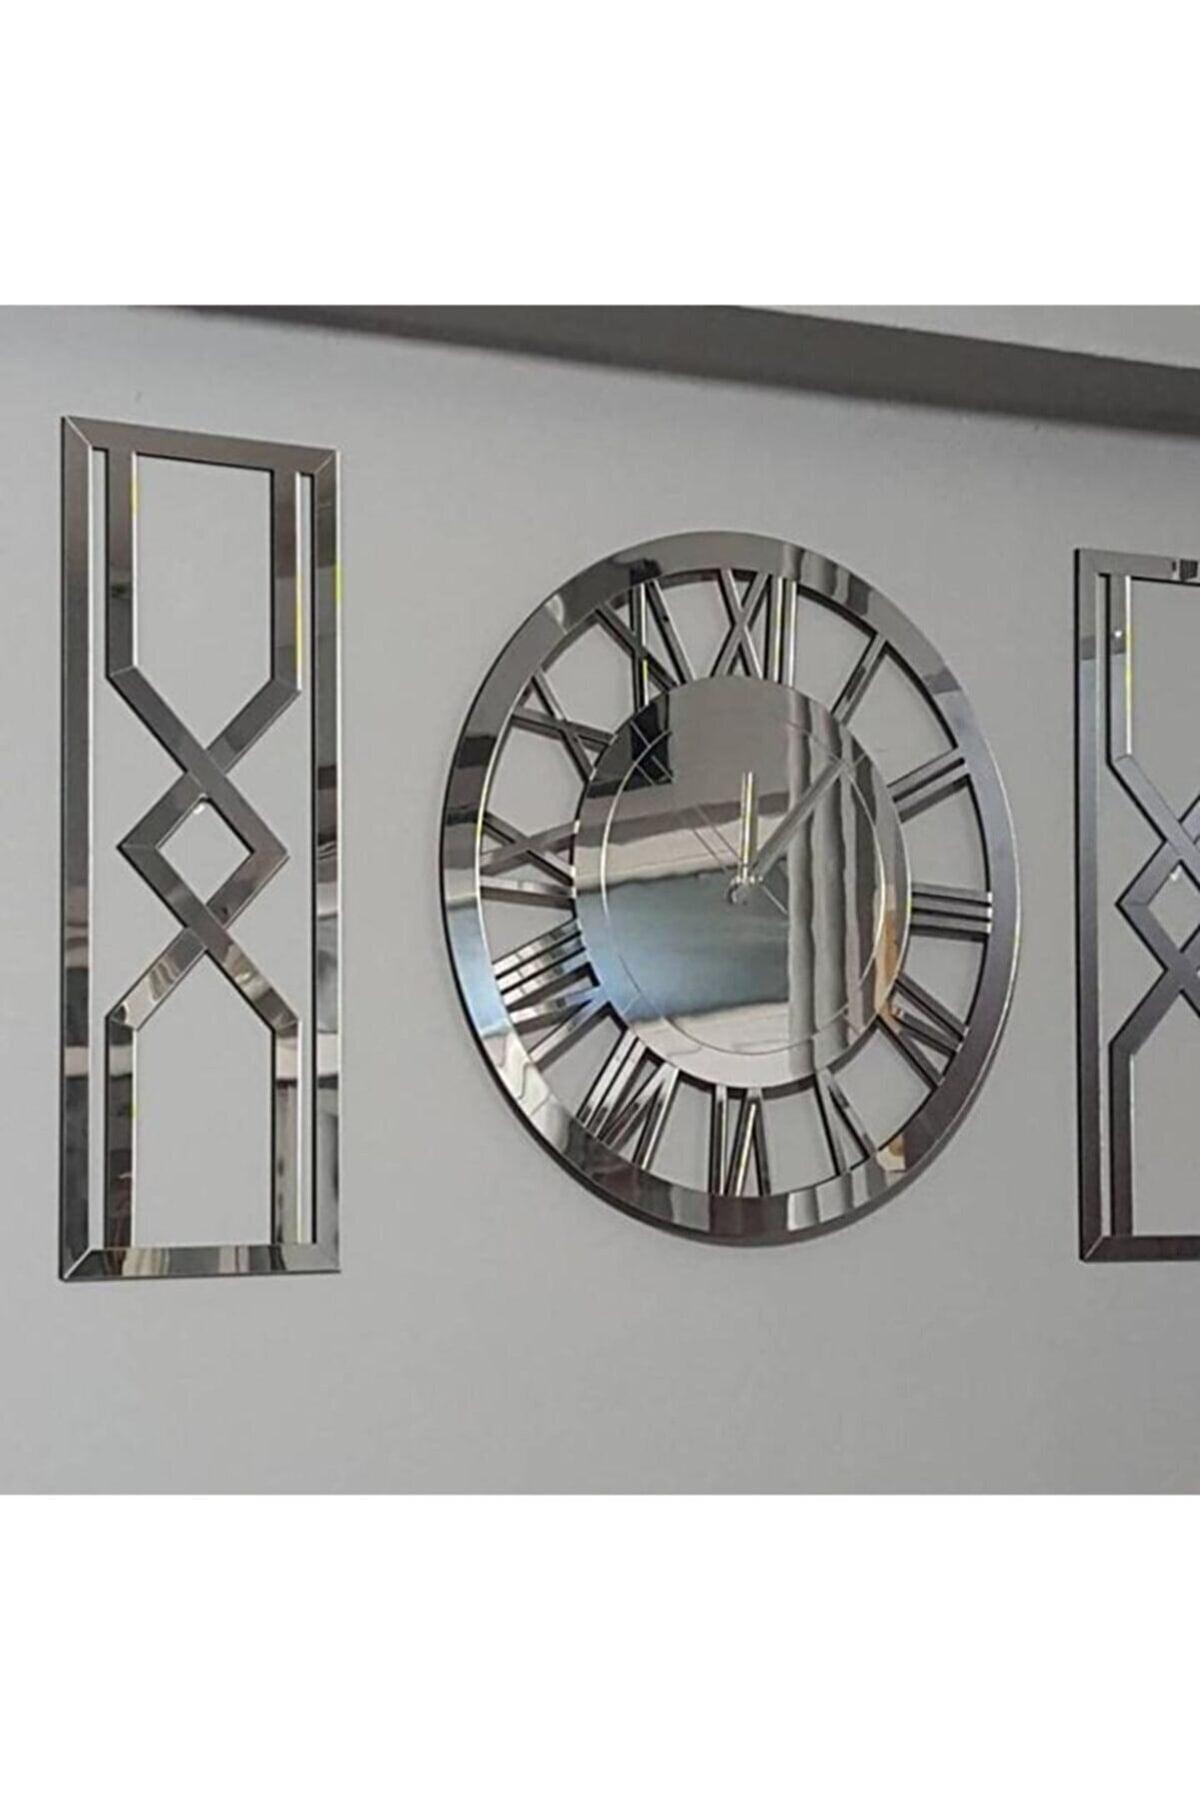 3 Pcs Modern Decorative Mirrored Plexi Wall Clock 40 Cm Silver - Swordslife